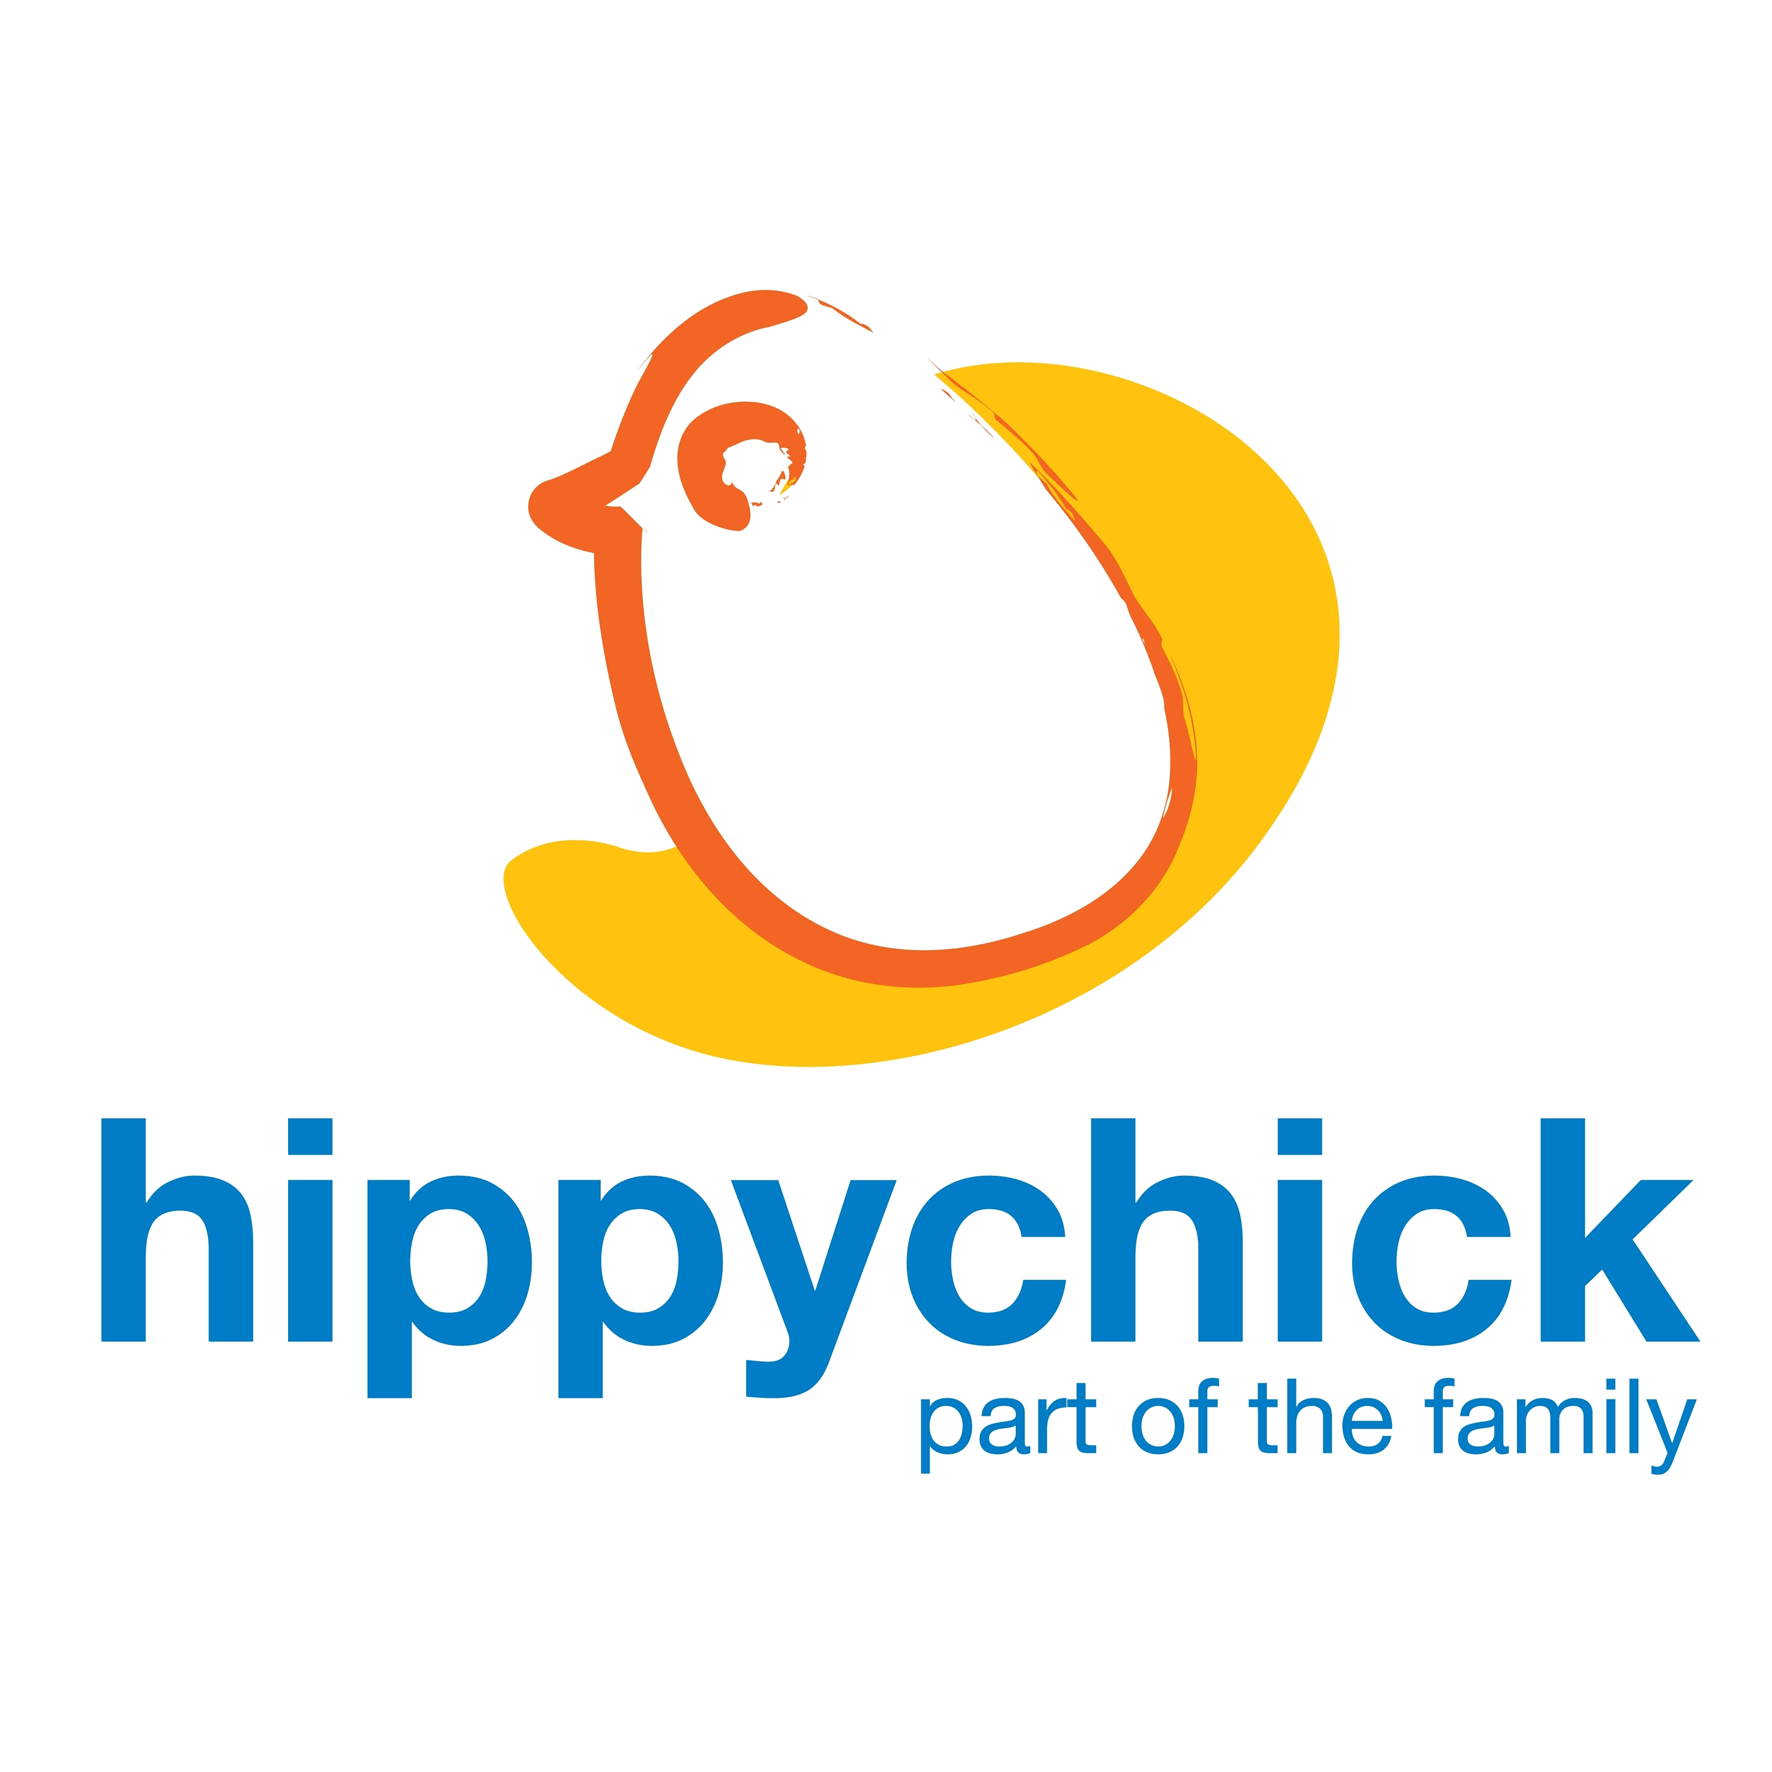 Hippychick Ltd